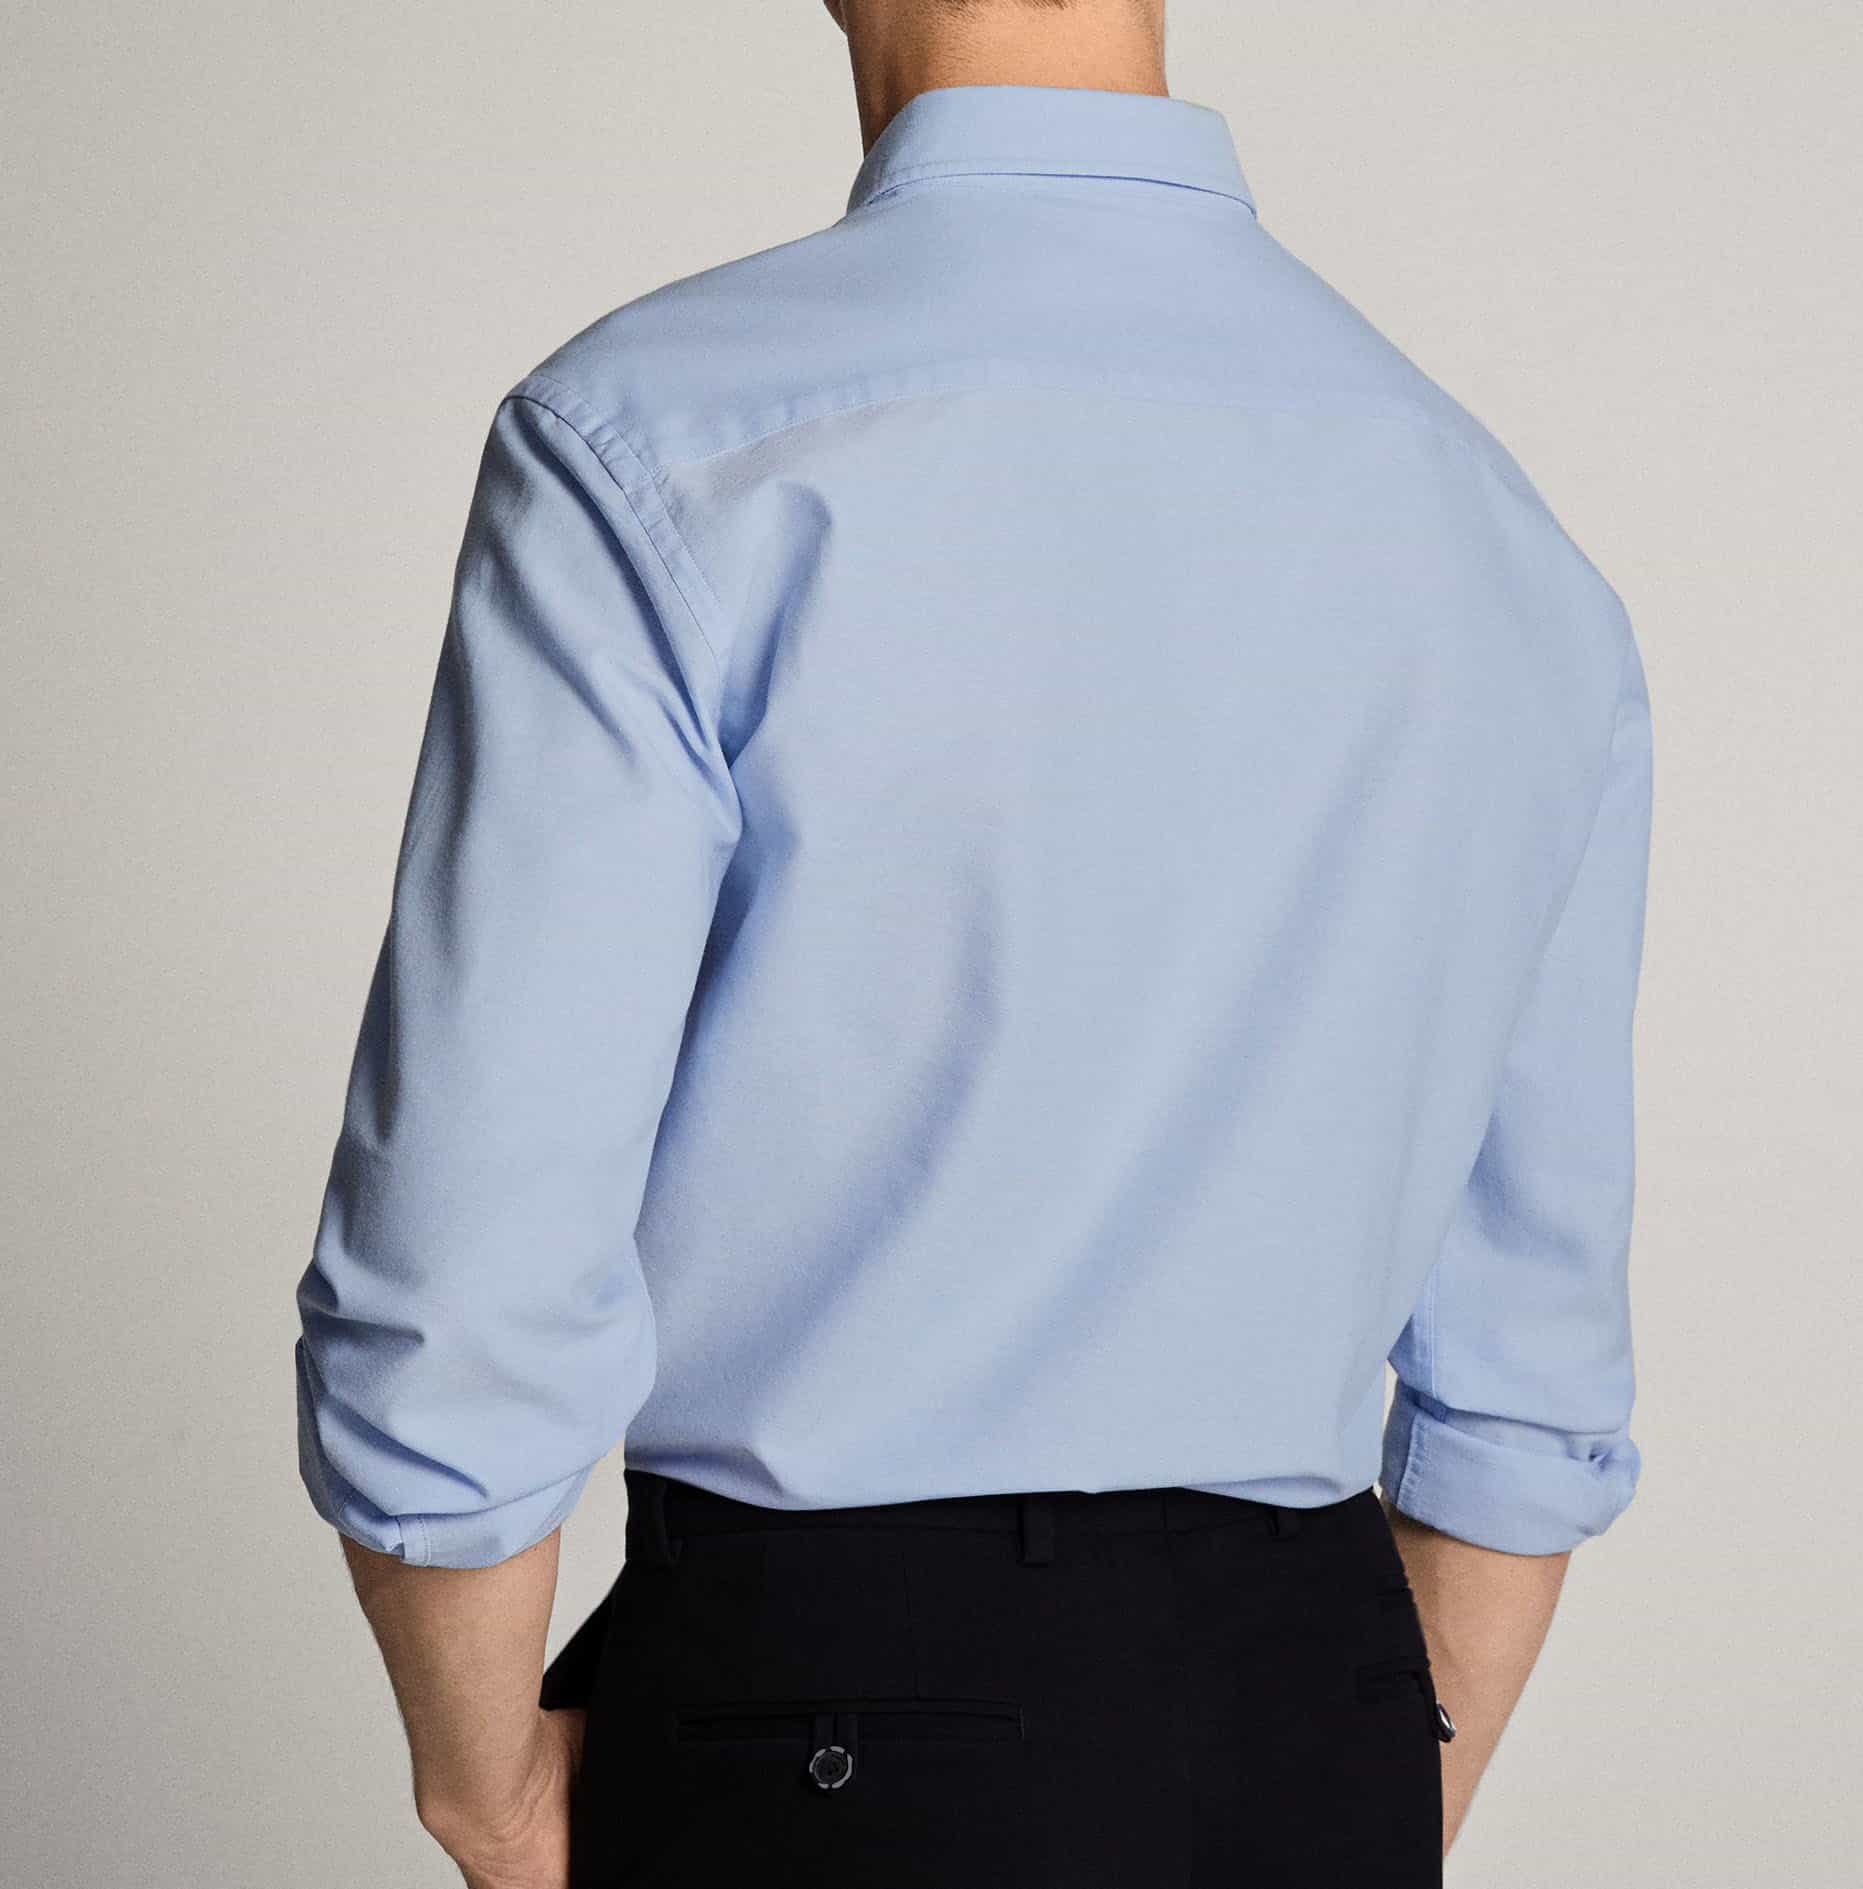 Men Blue Cotton Poly Formal Shirt-RRBMS008